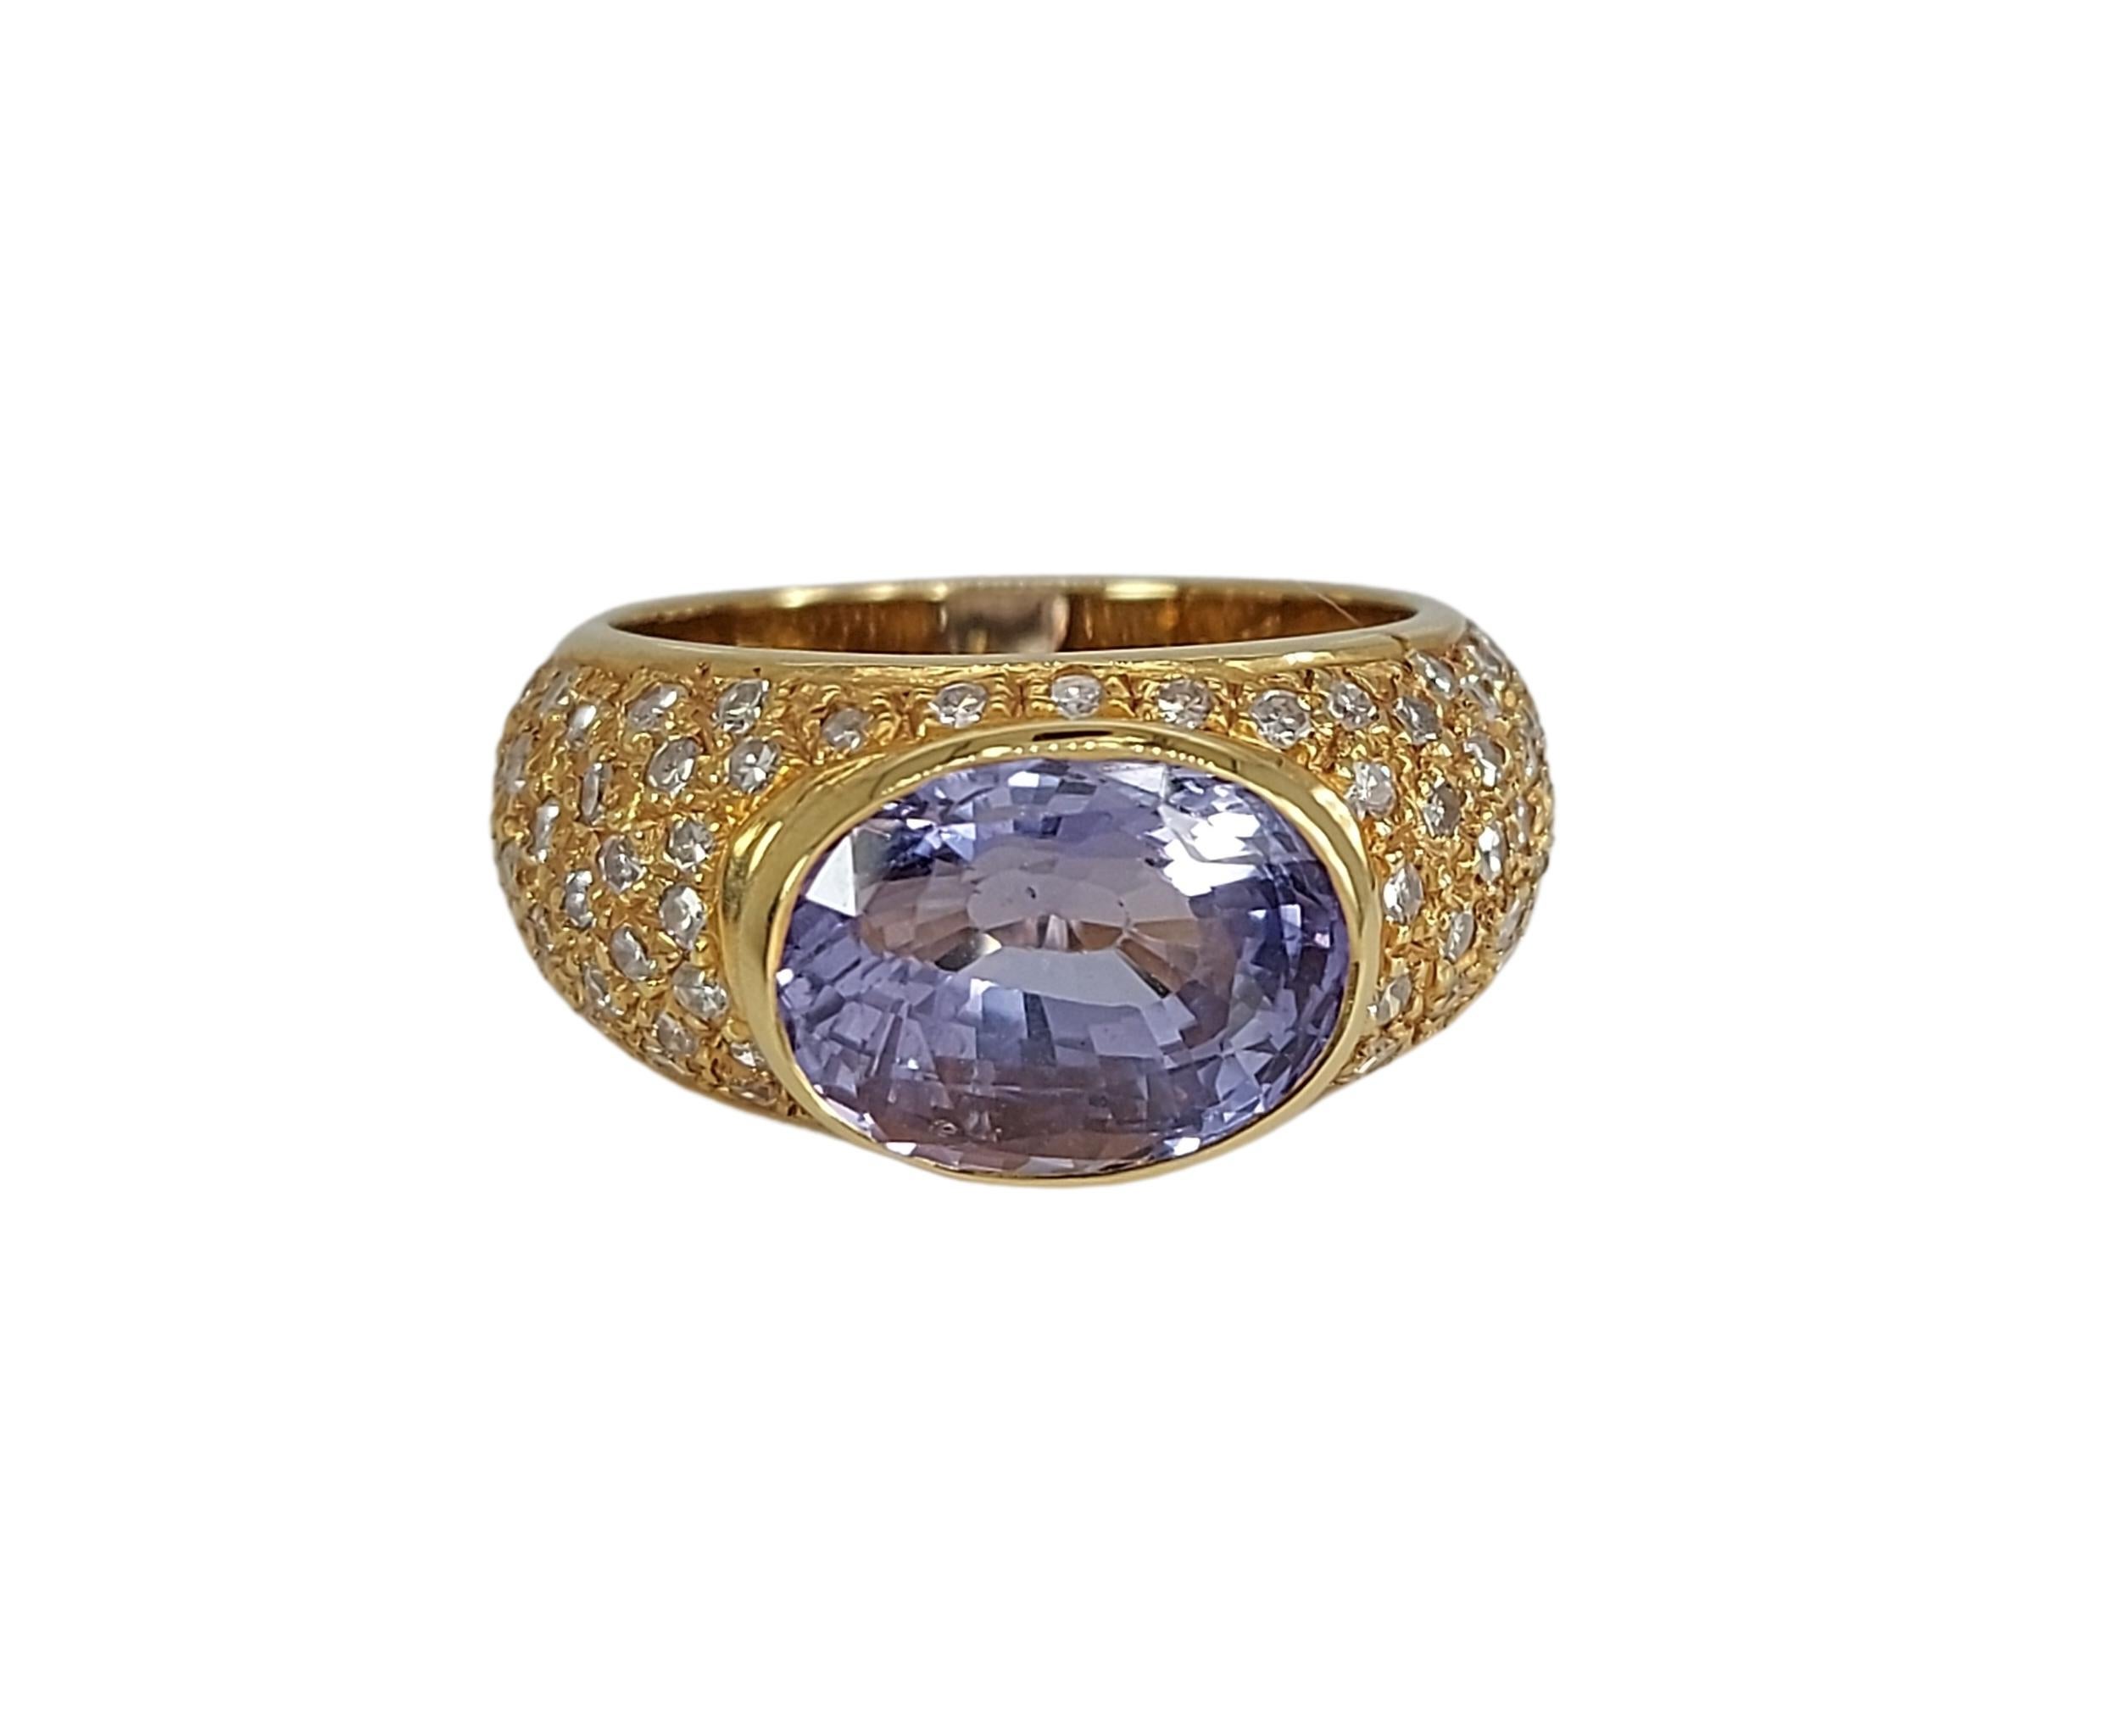 Gorgeous 18kt Yellow gold ring With 4ct Purple Ceylon Sapphire, 1ct Diamonds

Diamonds: Brilliant cut diamonds, together approx. 1ct

Sapphire: Purple Ceylon sapphire, approx. 4ct

Material: 18kt Yellow gold

Total weight: 9.2 gram / 0.325 oz / 6